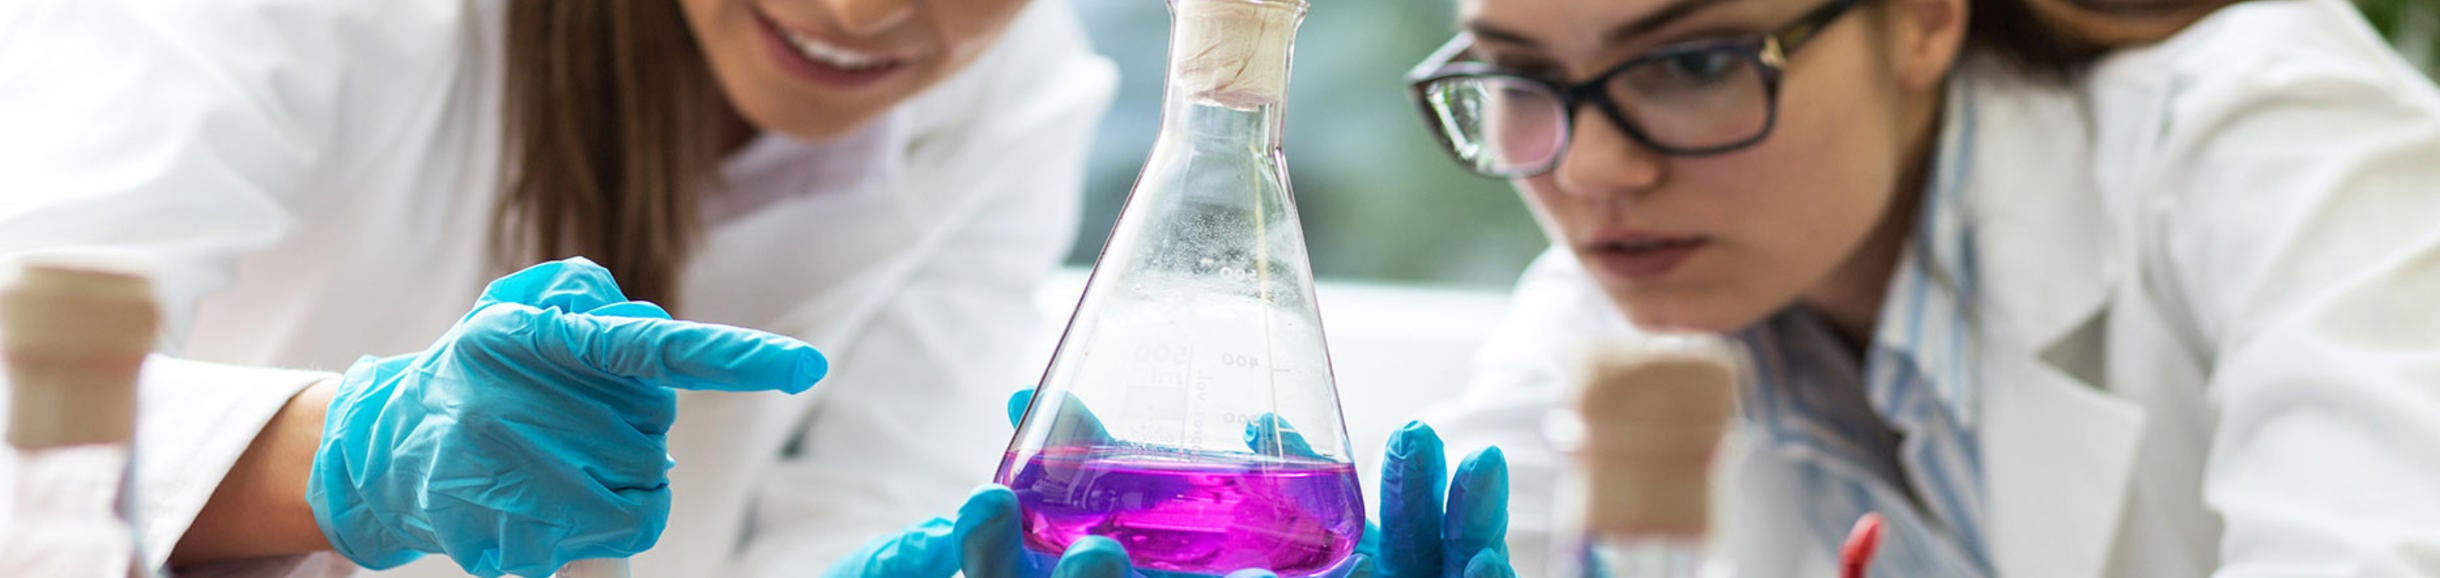 lab students looking at beaker with purple liquid (c) iStock